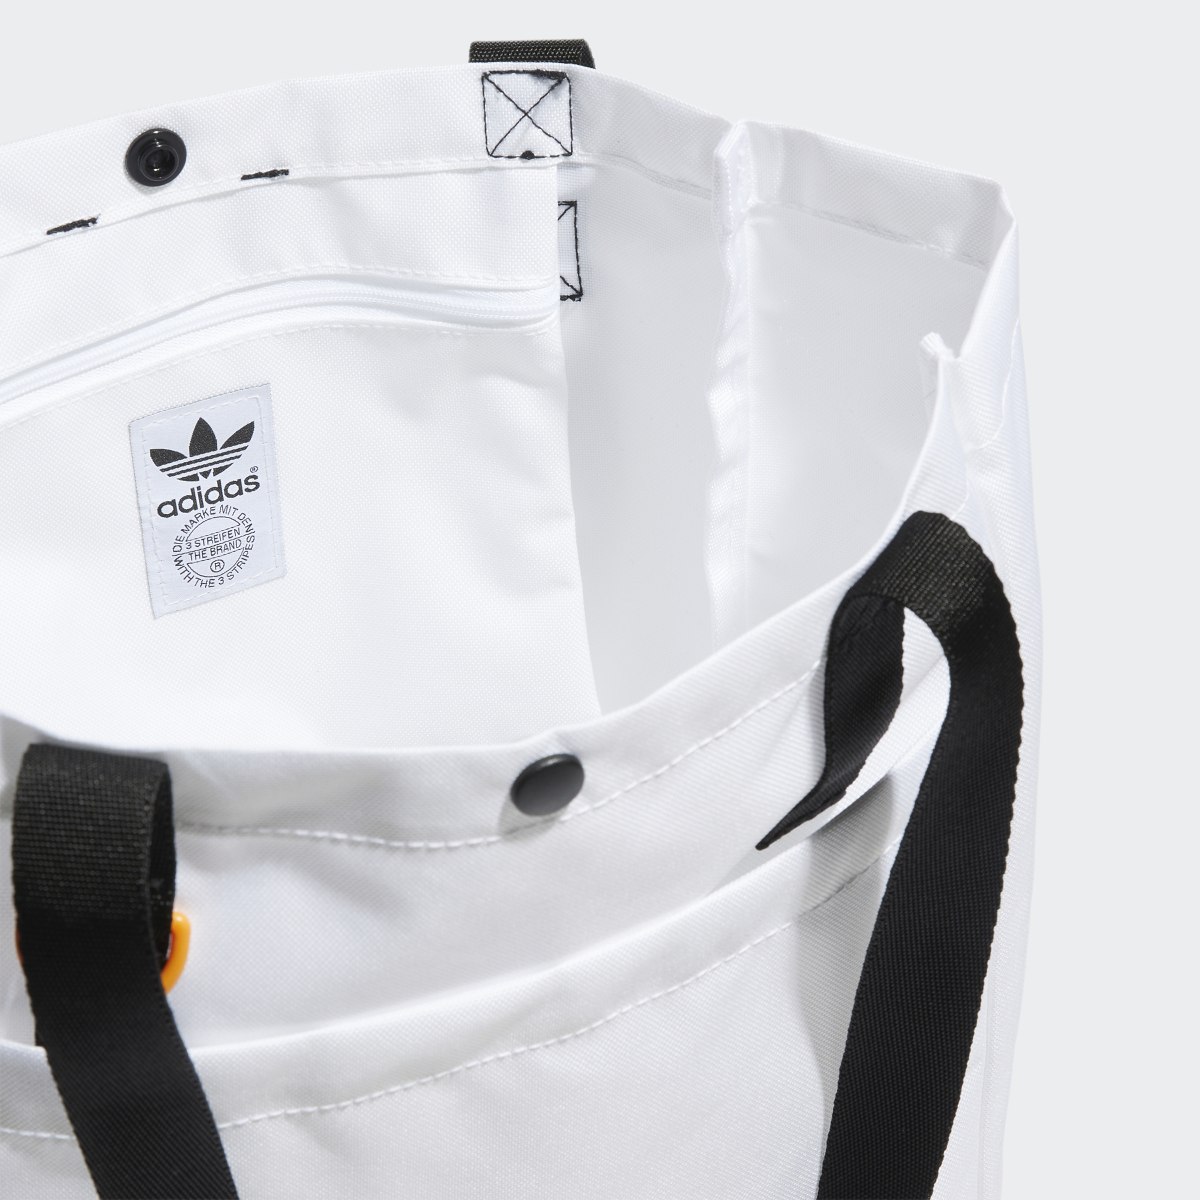 Adidas Simple Tote Bag. 6